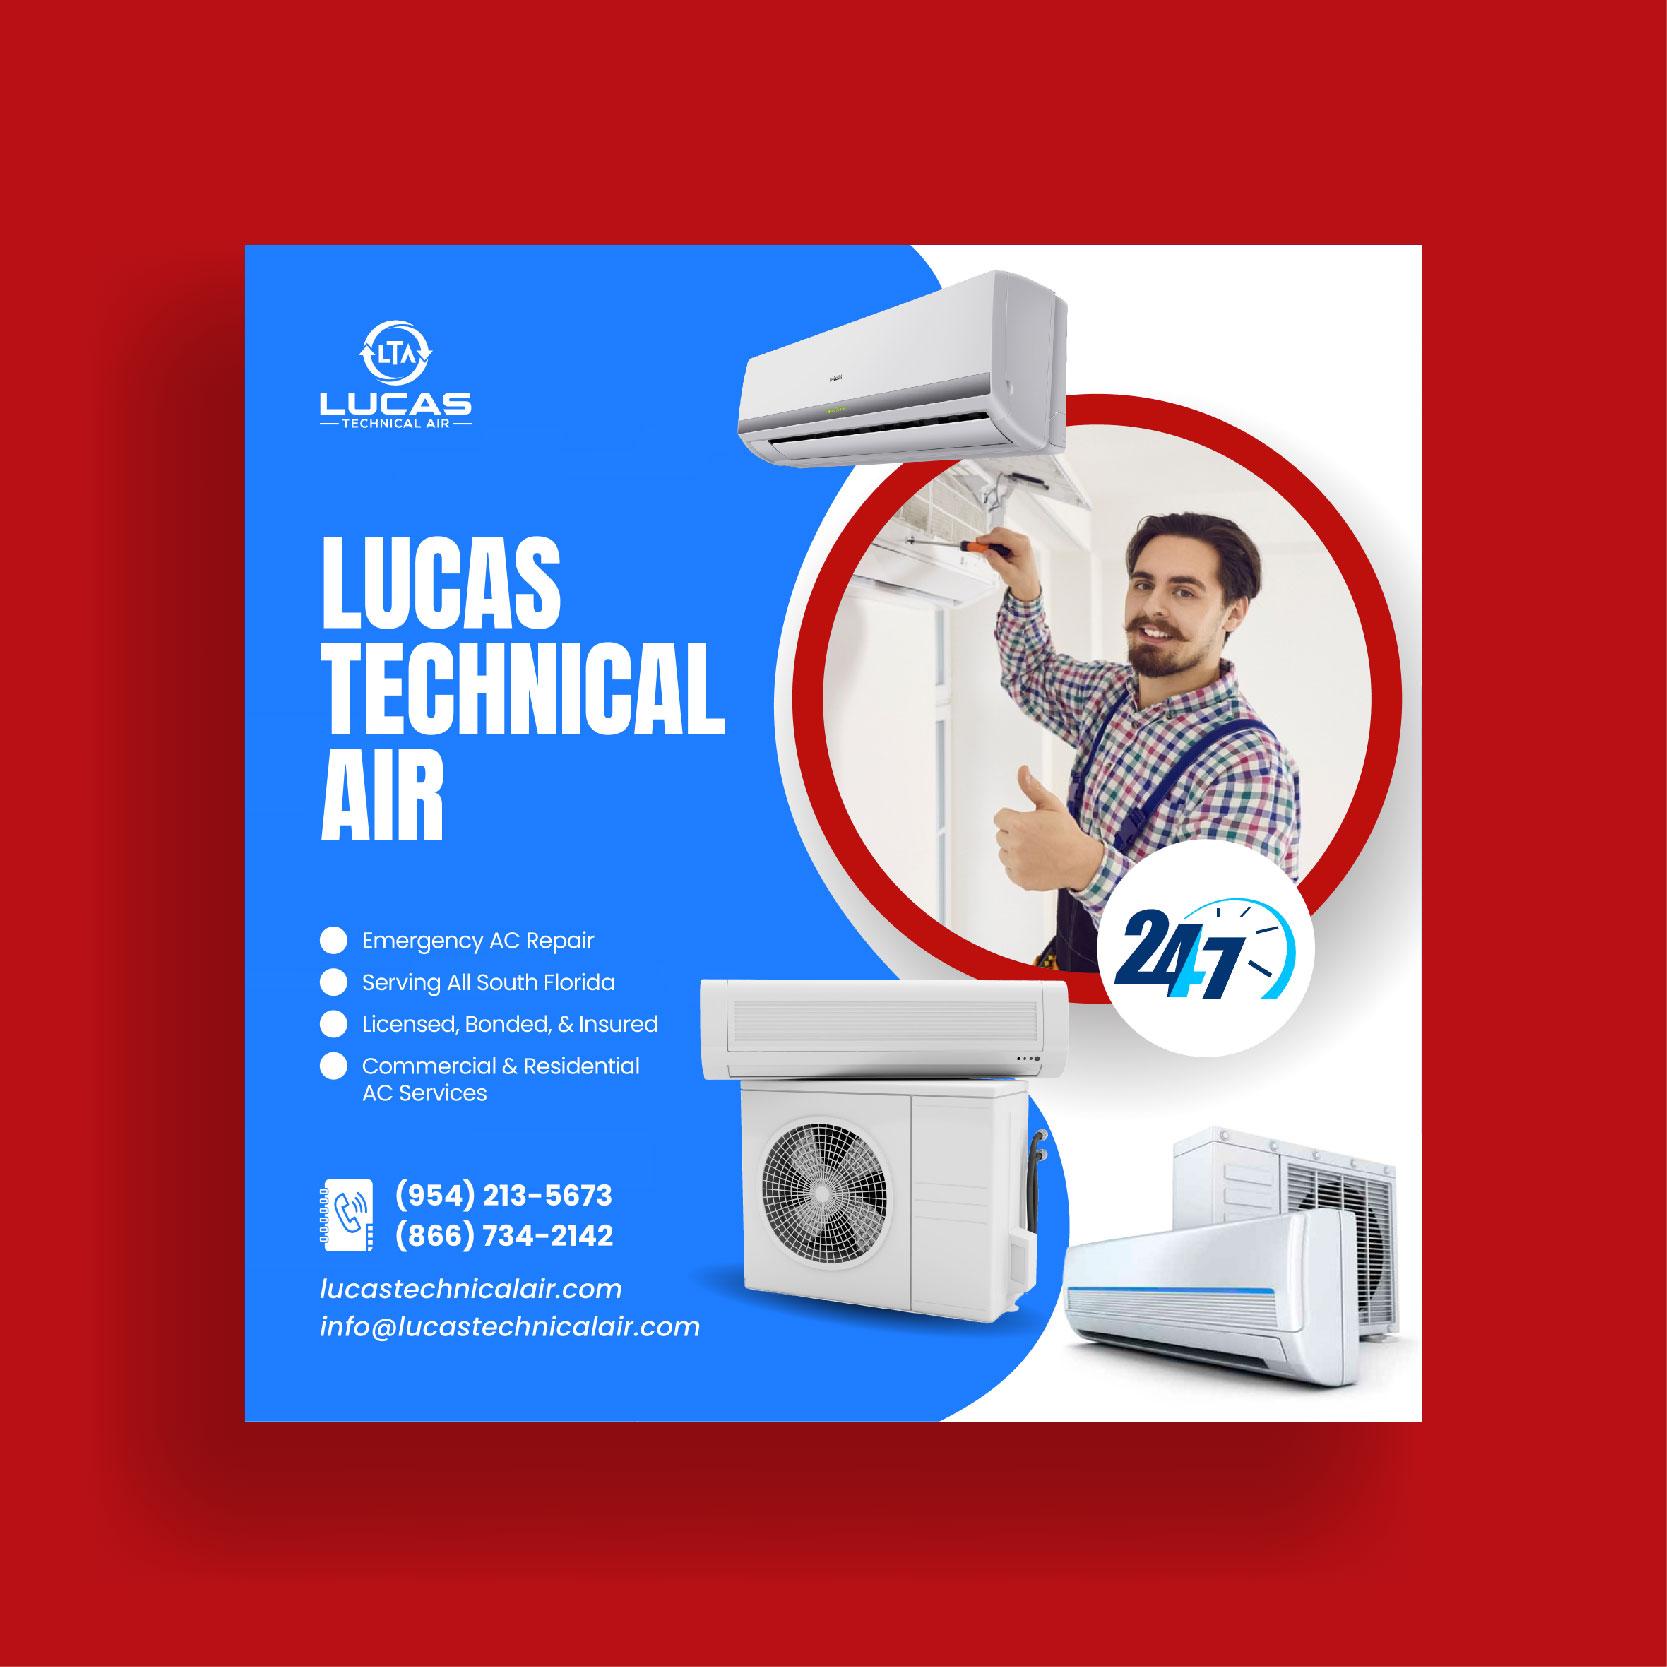 Lucas Technical Air